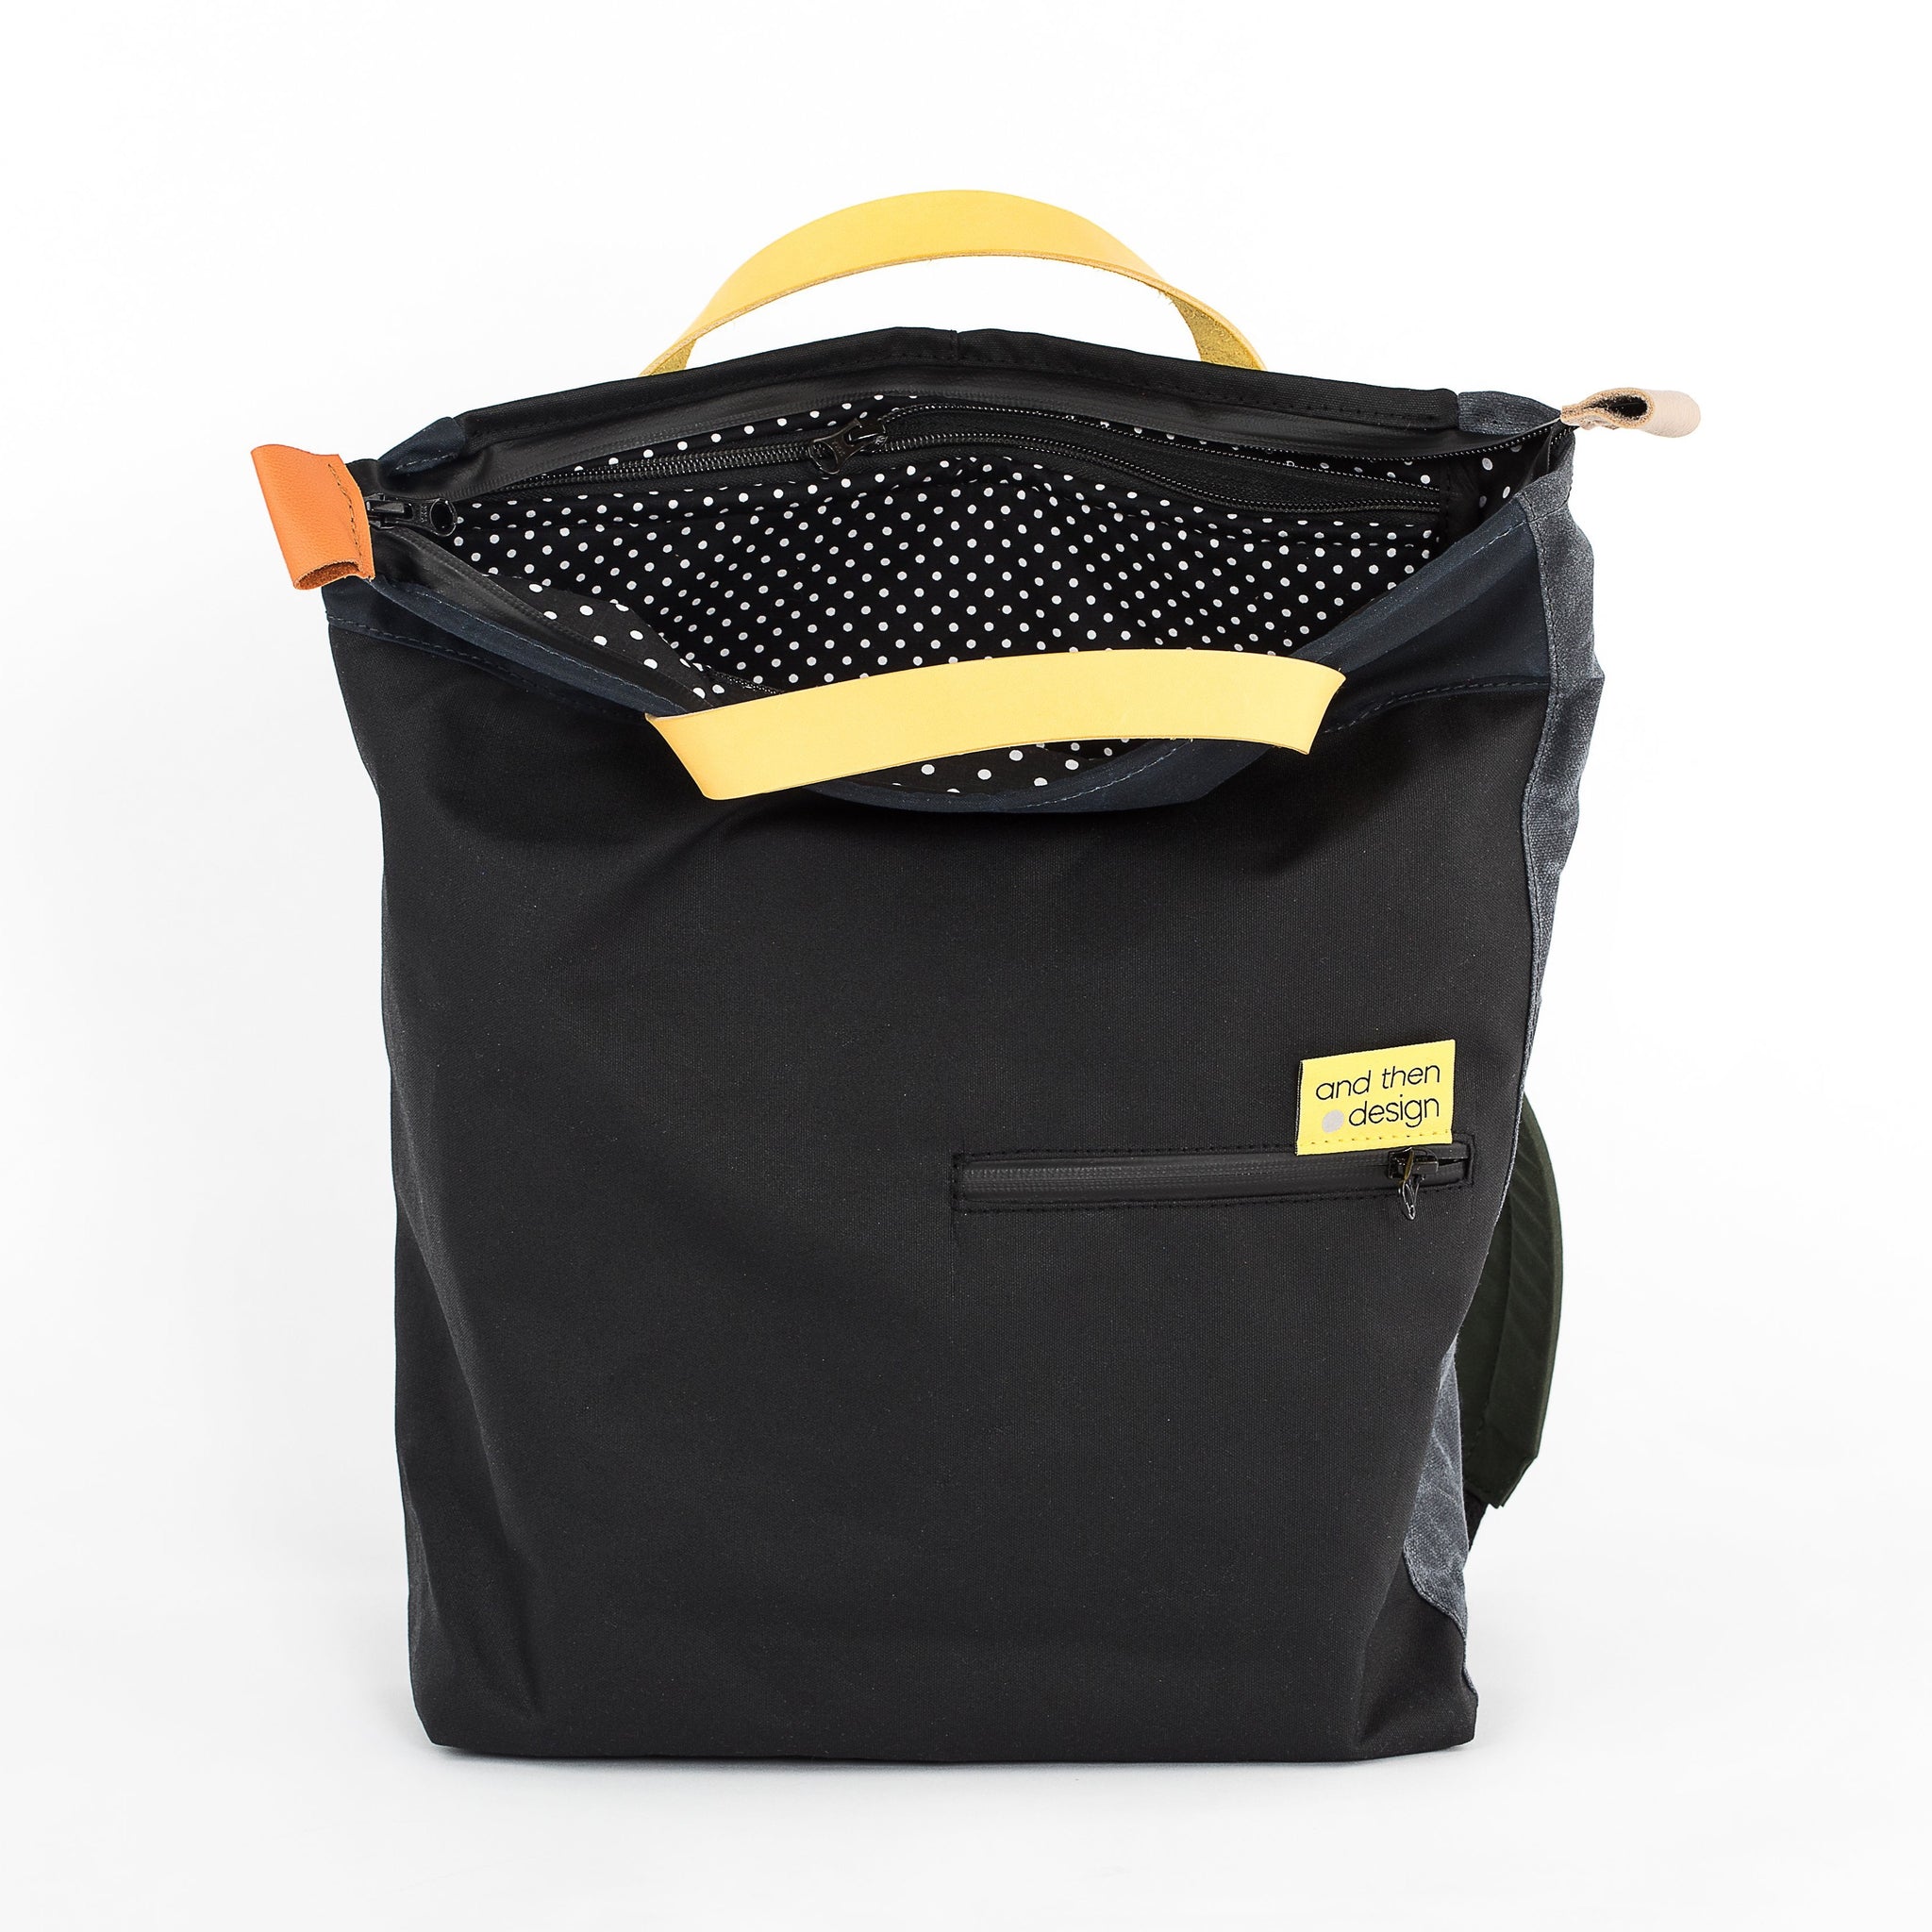 andthen.design an evolution of Vel-Oh.com-Dave | Backpack zero-1 polkadot lining, polka dot inside the bag, polka dot lining